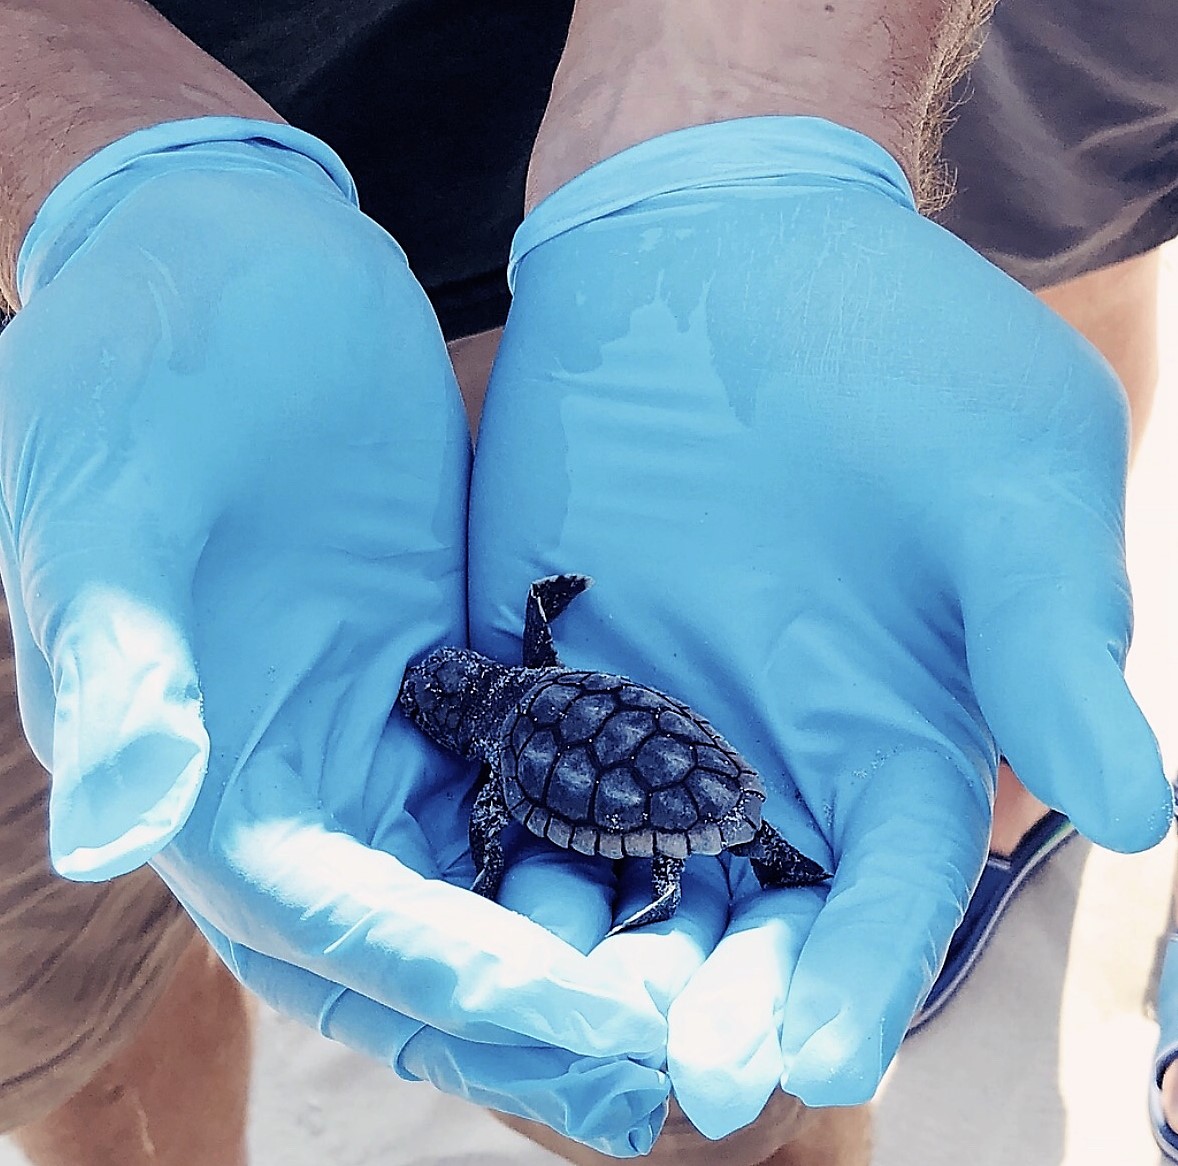 Cape Hatteras National Seashore biotech holding a baby Loggerhead sea turtle.